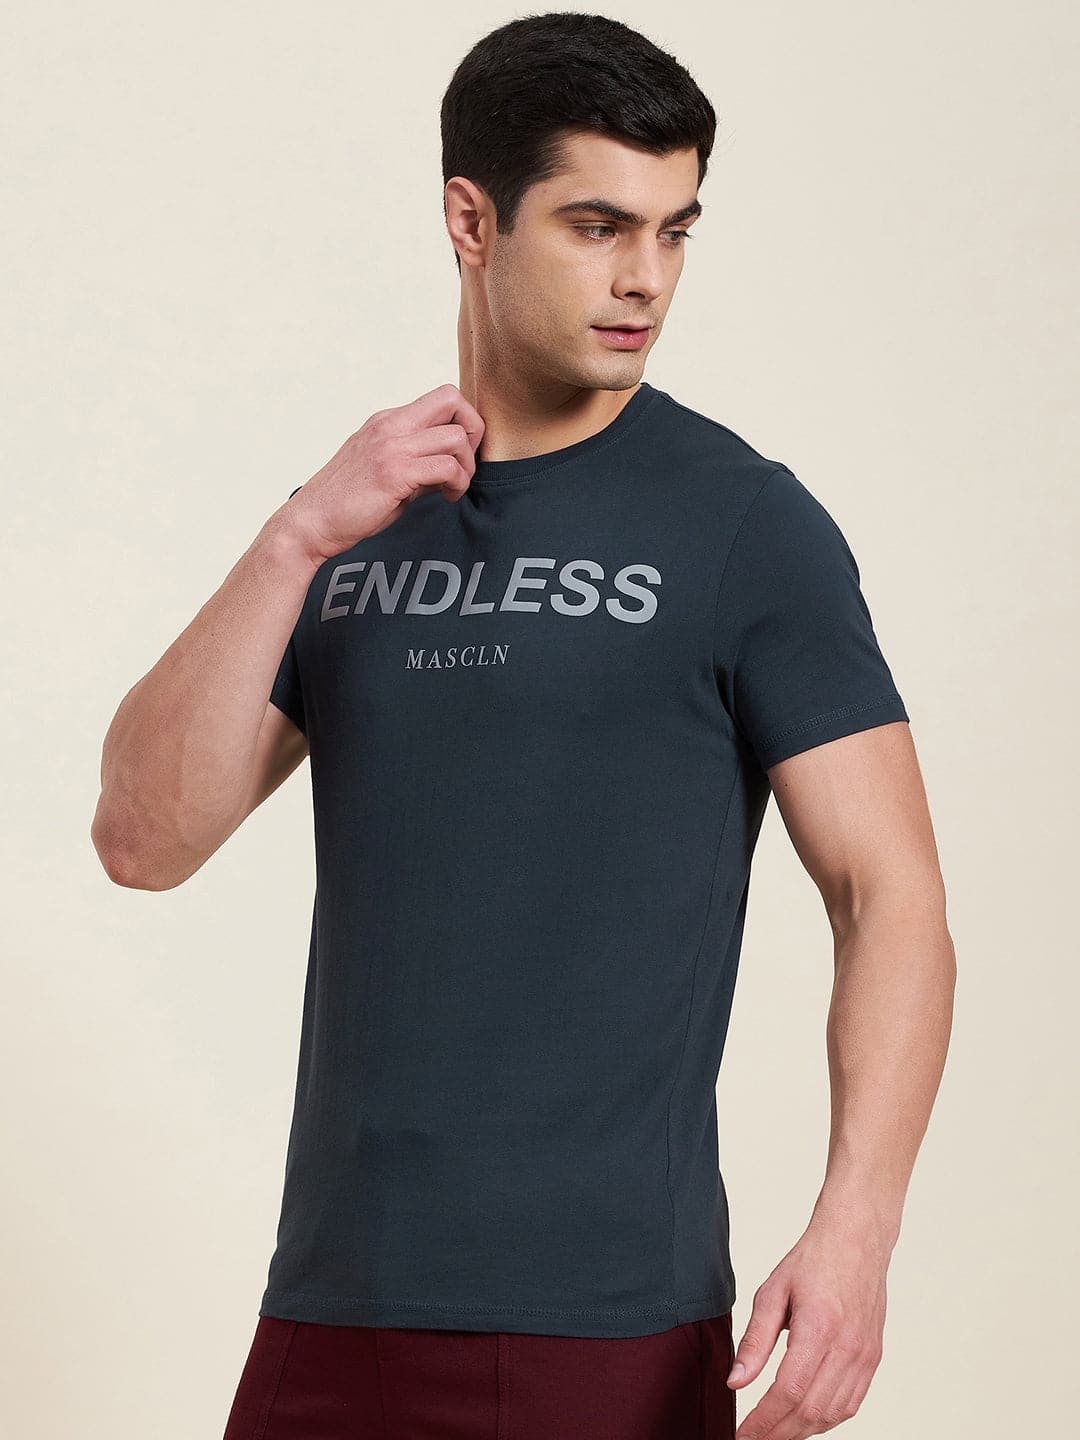 Men's Dark Blue ENDLESS Regular Fit T-Shirt - LYUSH-MASCLN